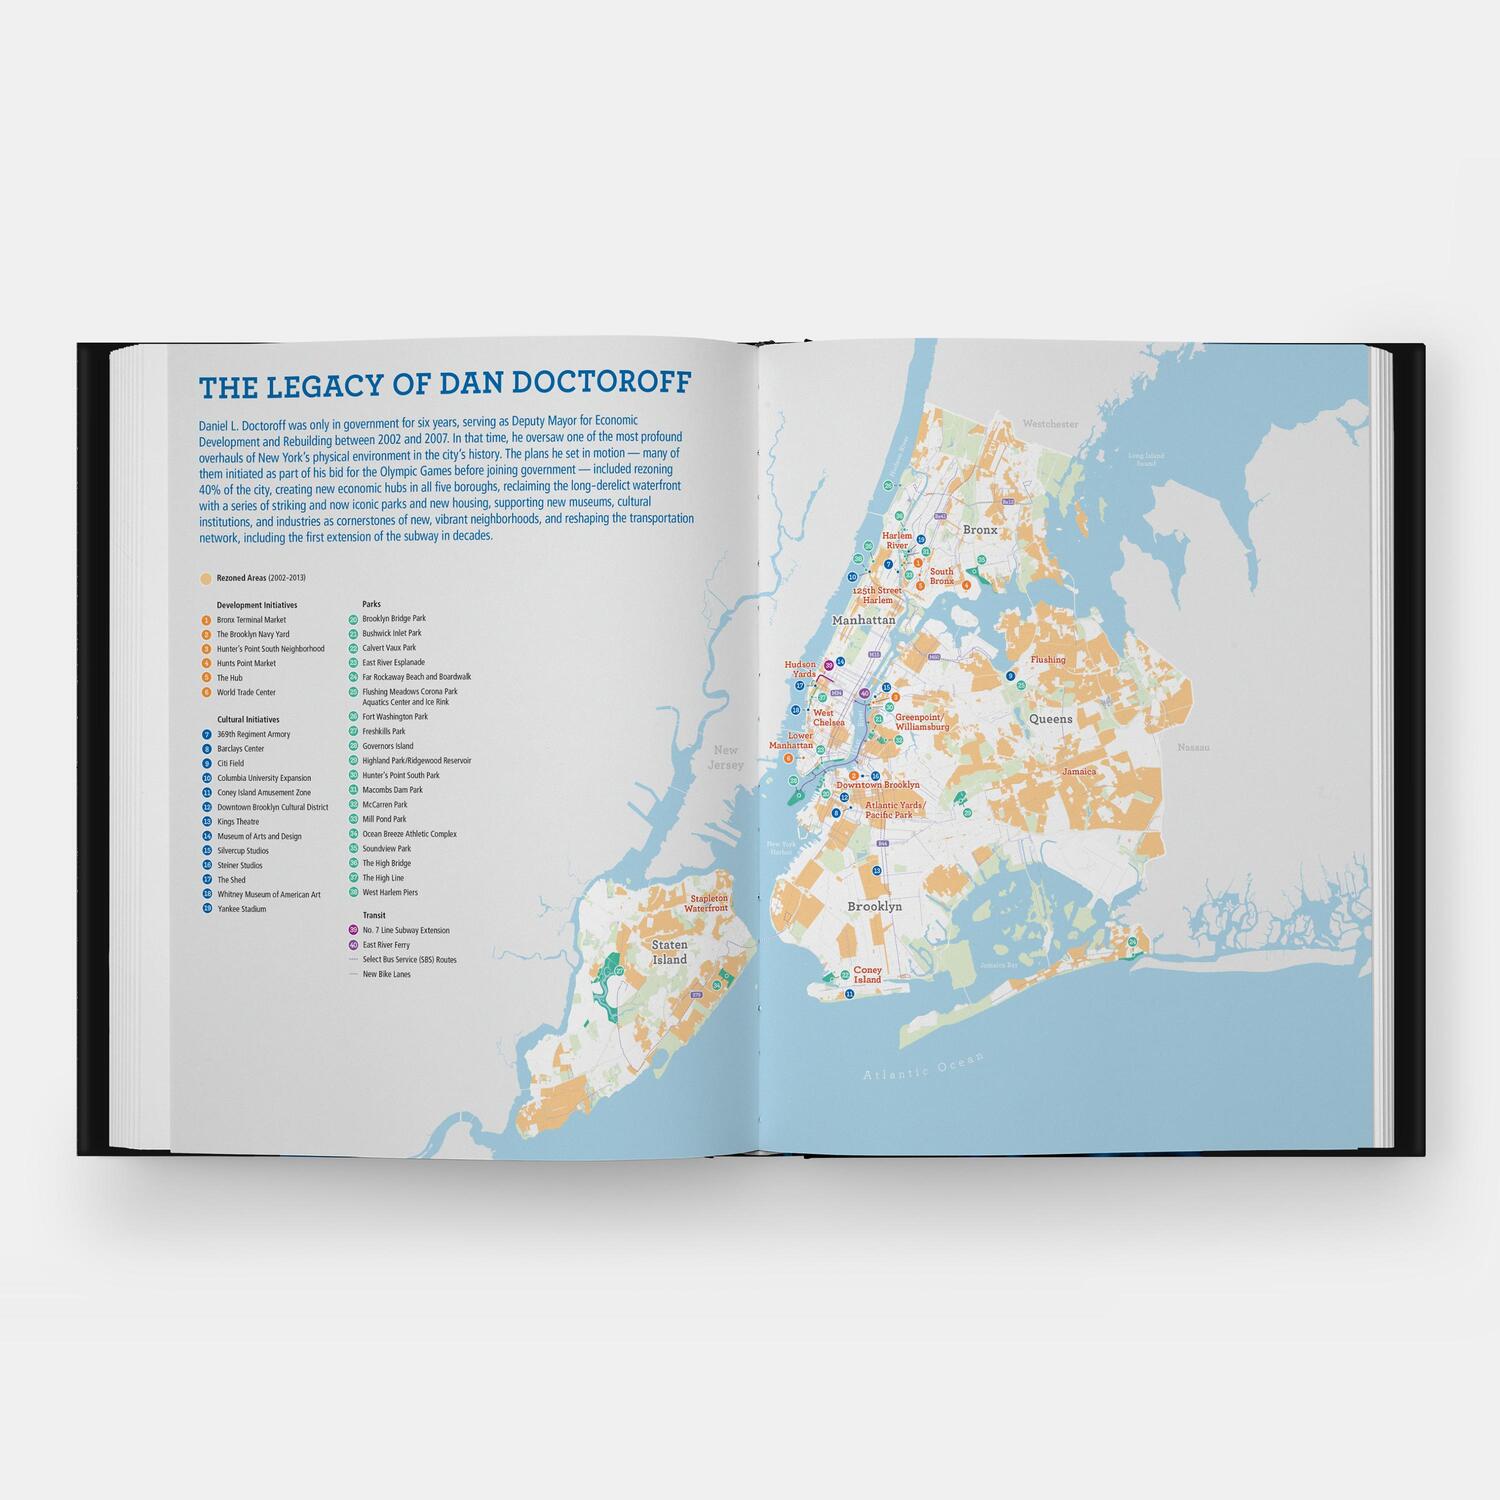 Bild: 9781580936323 | The Urbanist | Dan Doctoroff and the Rise of New York | Buch | 490 S.